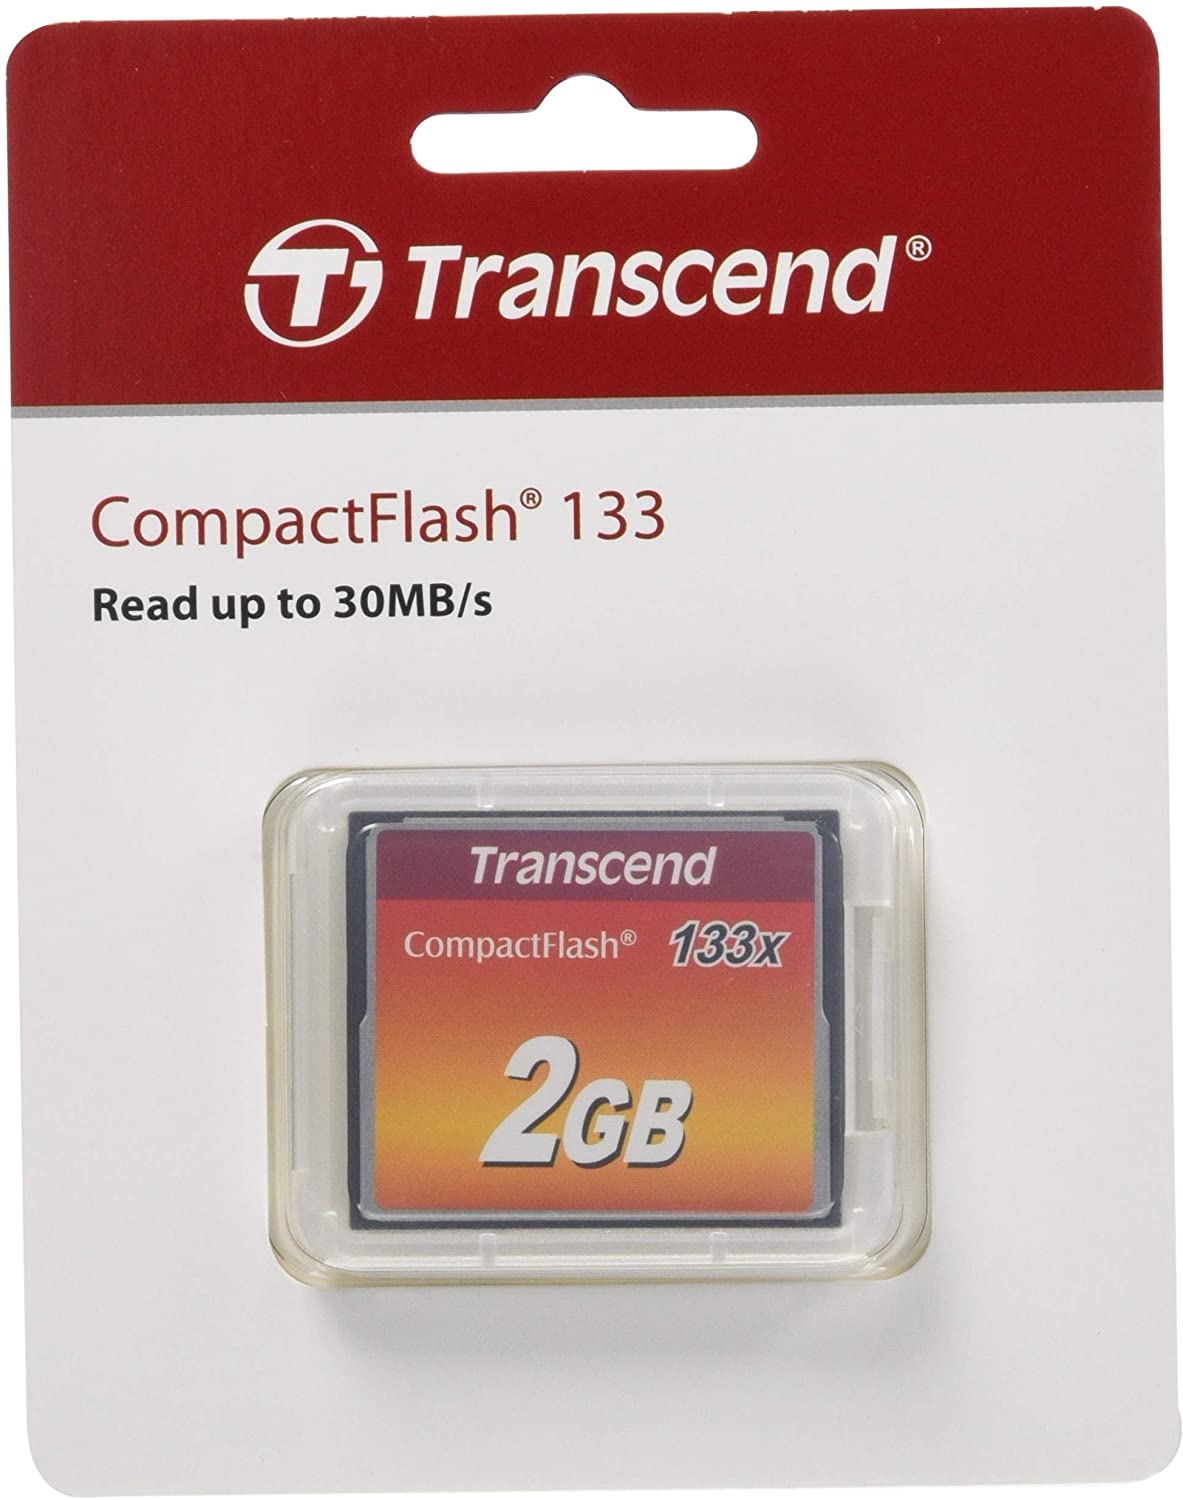 Transcend CompactFlash Card 2GB 133x สินค้ารับประกัน 5 ปี (ซื้อแล้วไม่รับคืน)